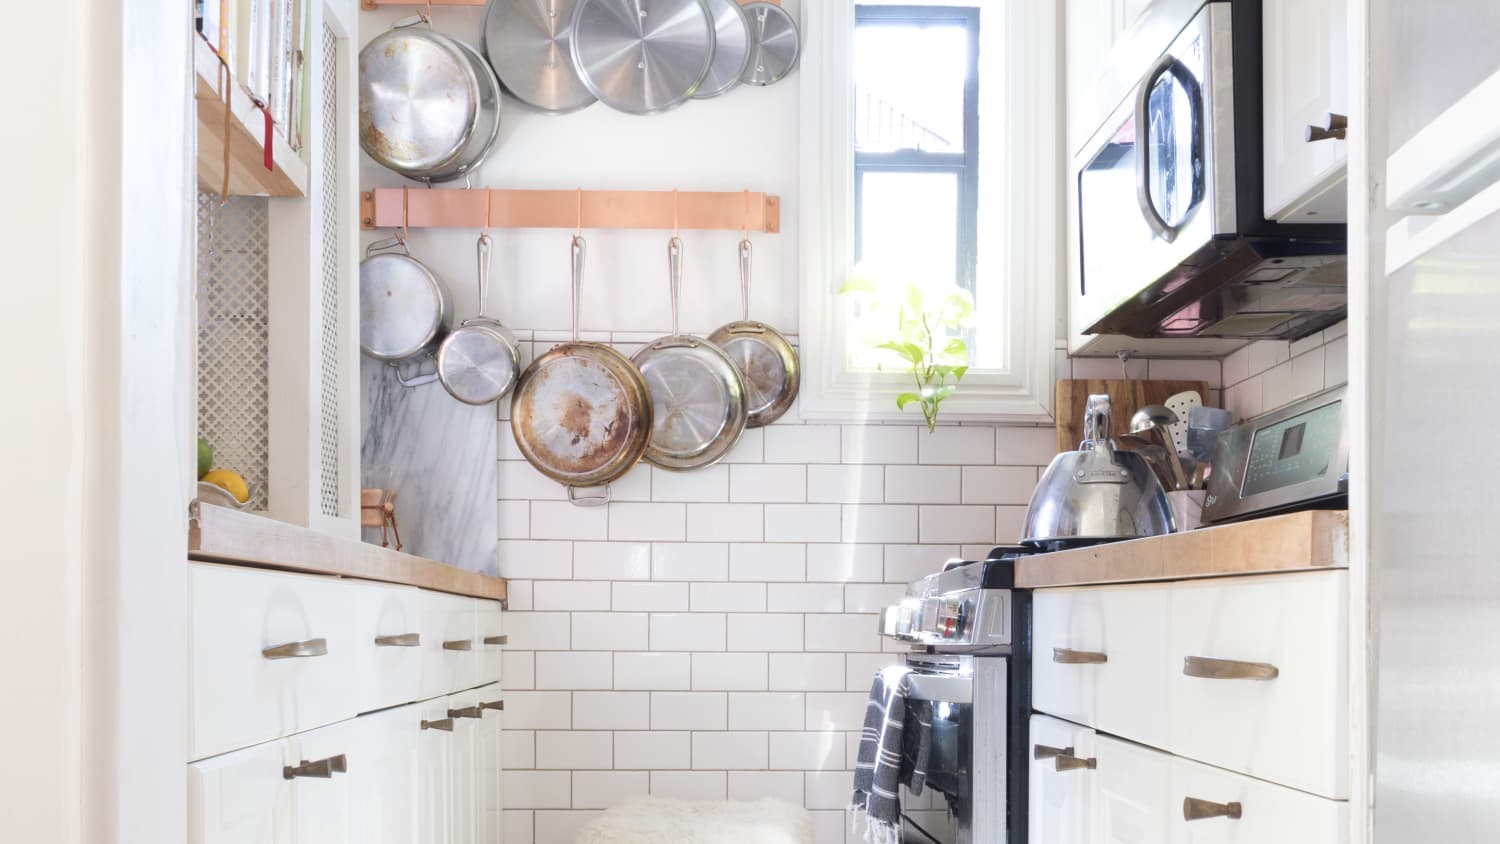 20+ Best Small Kitchen Design Ideas   Decorating Tiny Apartment ...